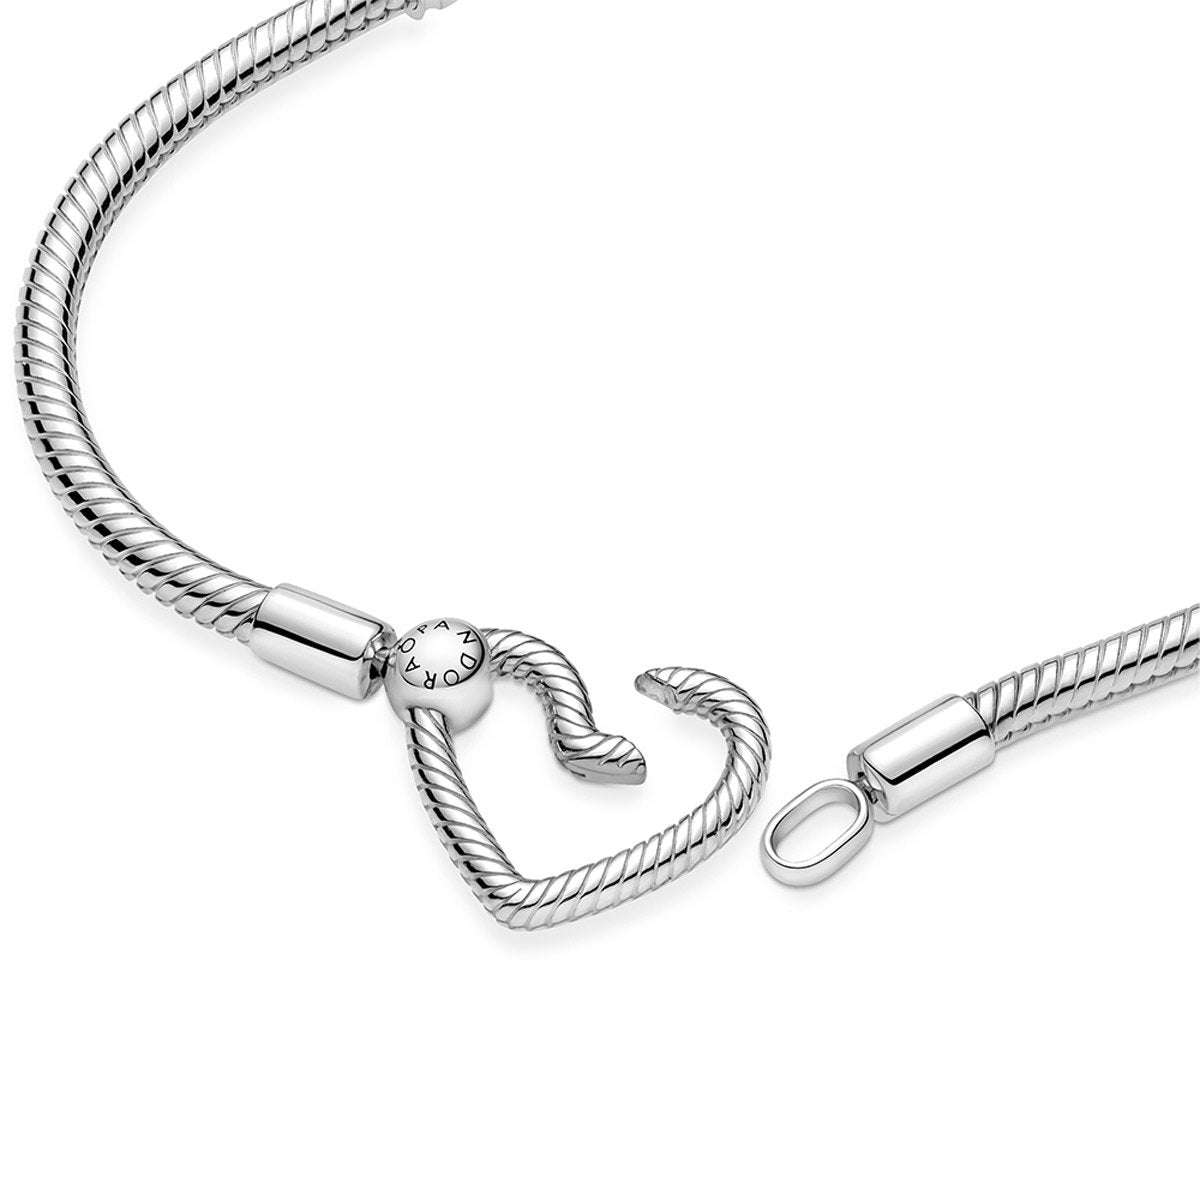 NEW Authentic PANDORA 925 Silver Moment Logo Snake Chain Necklace 590742HV  45 50 | eBay